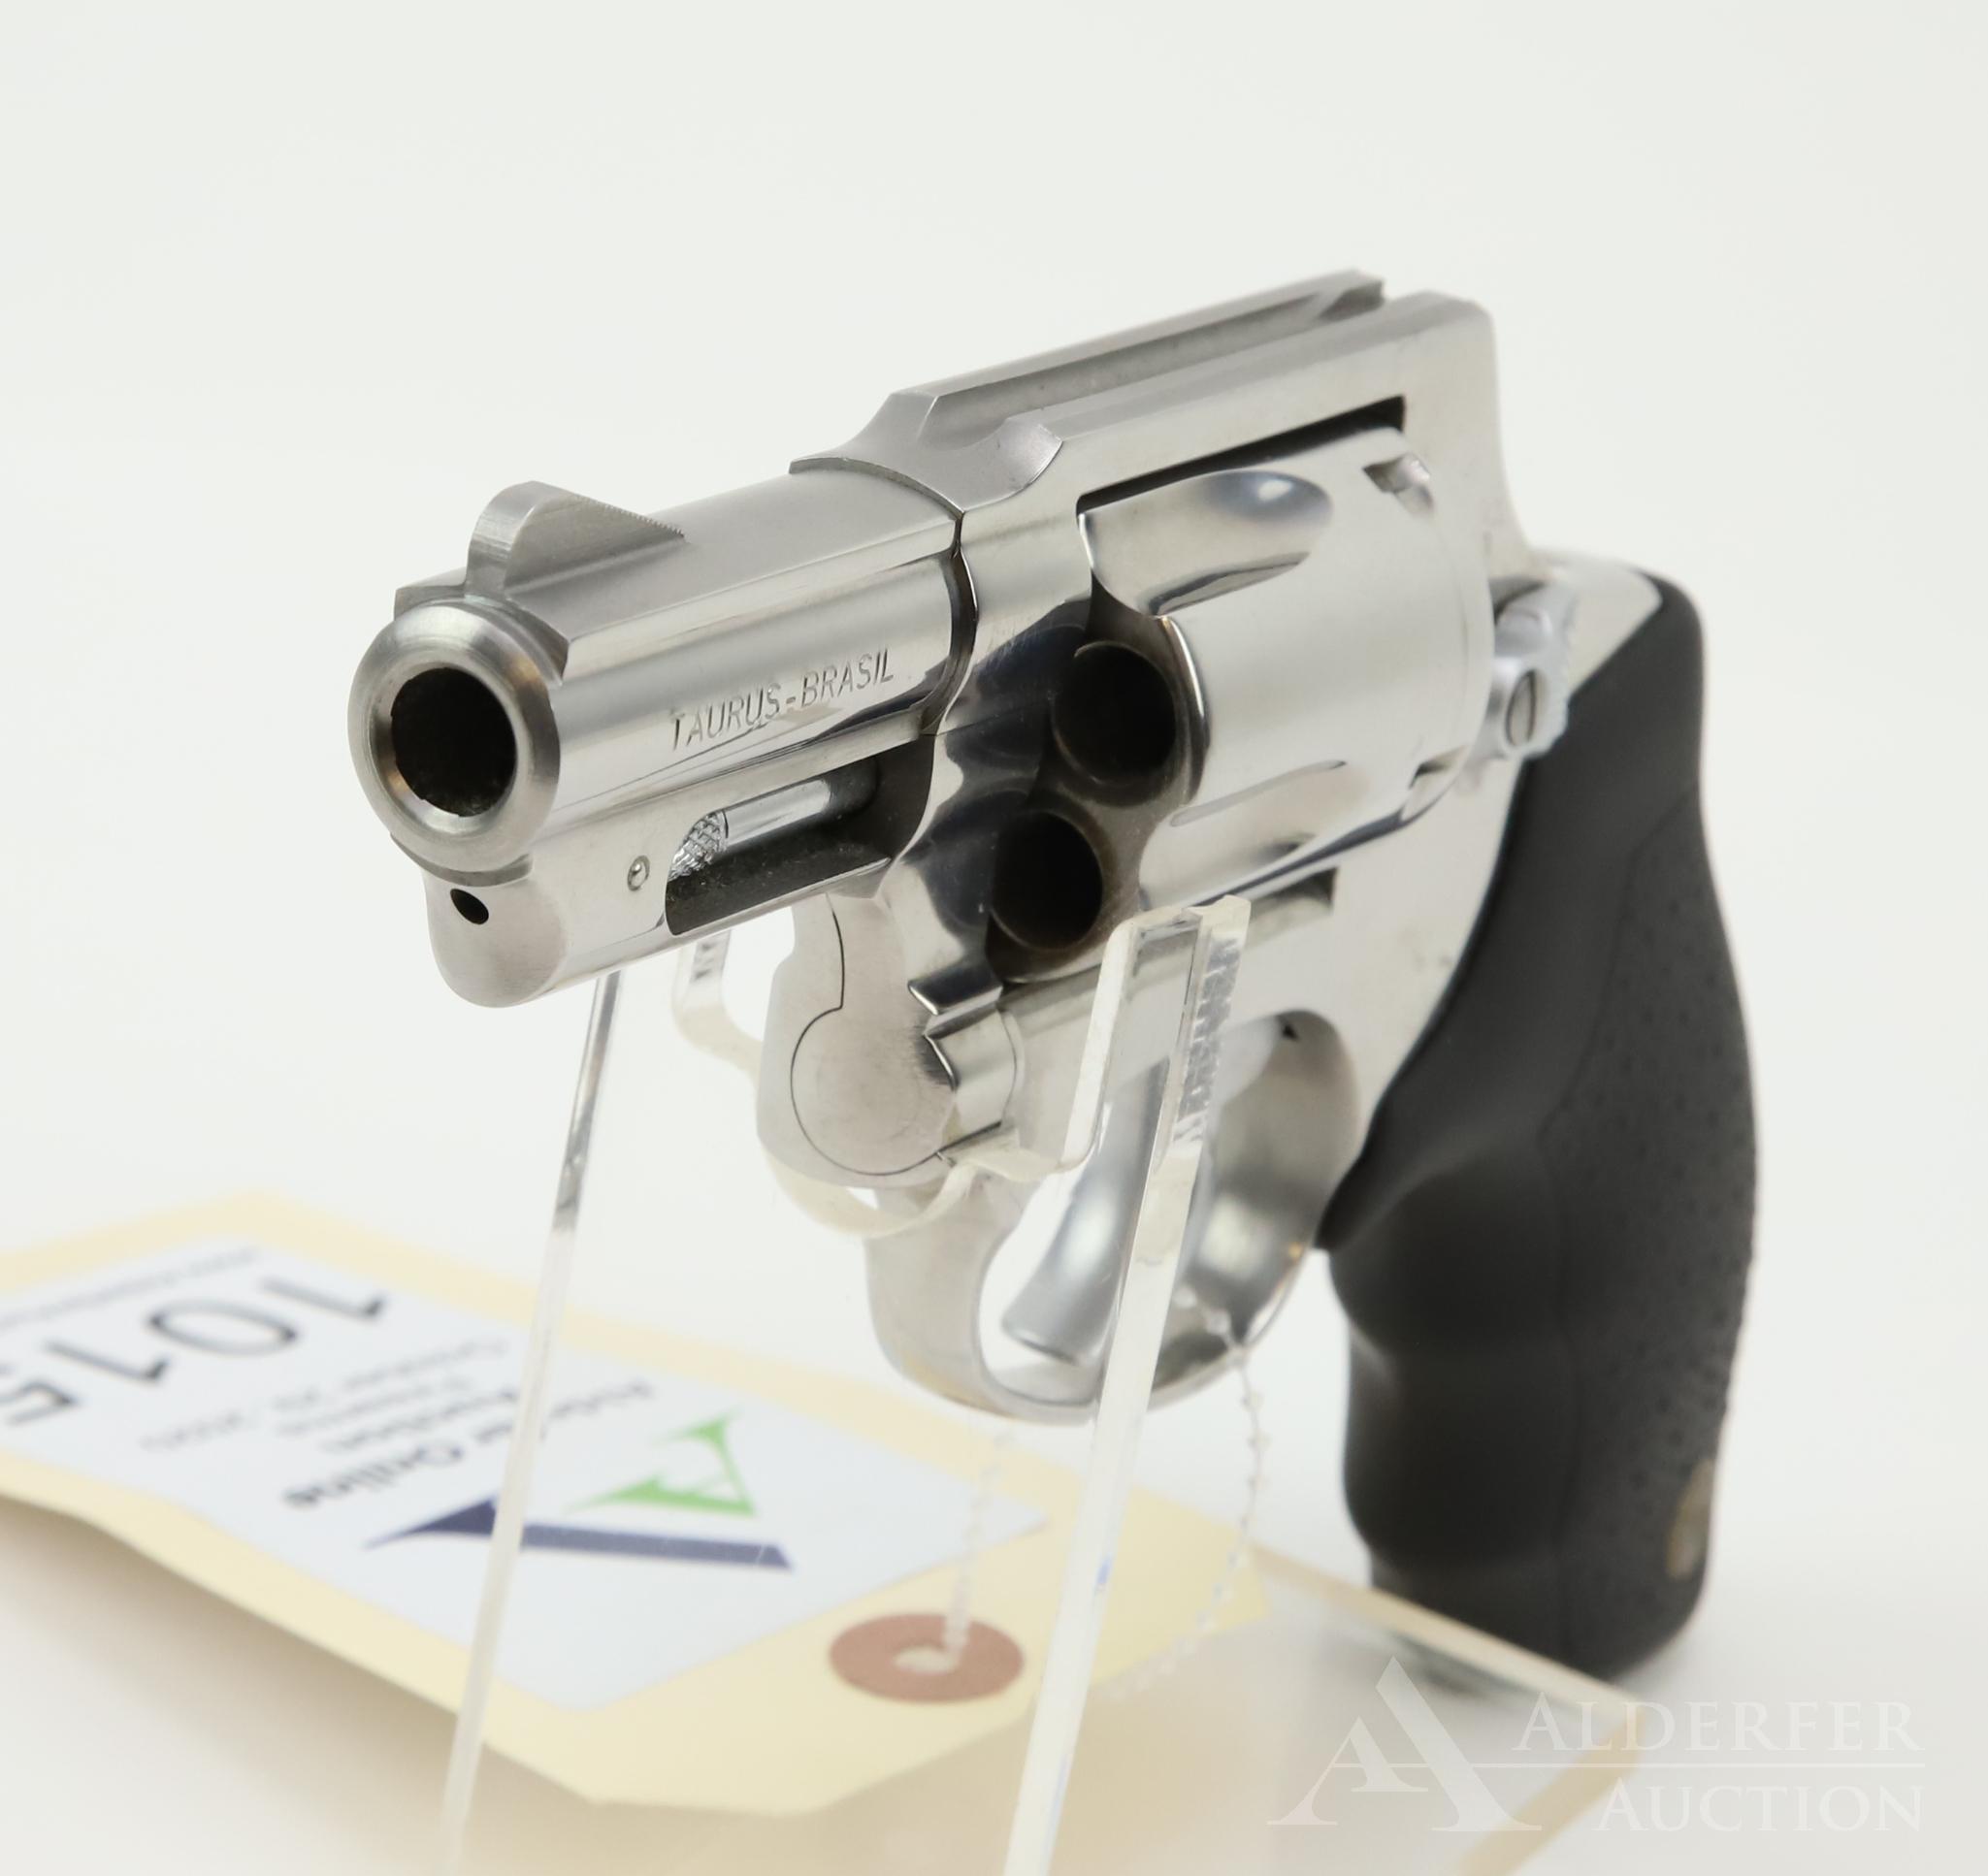 Taurus 605 double action revolver.